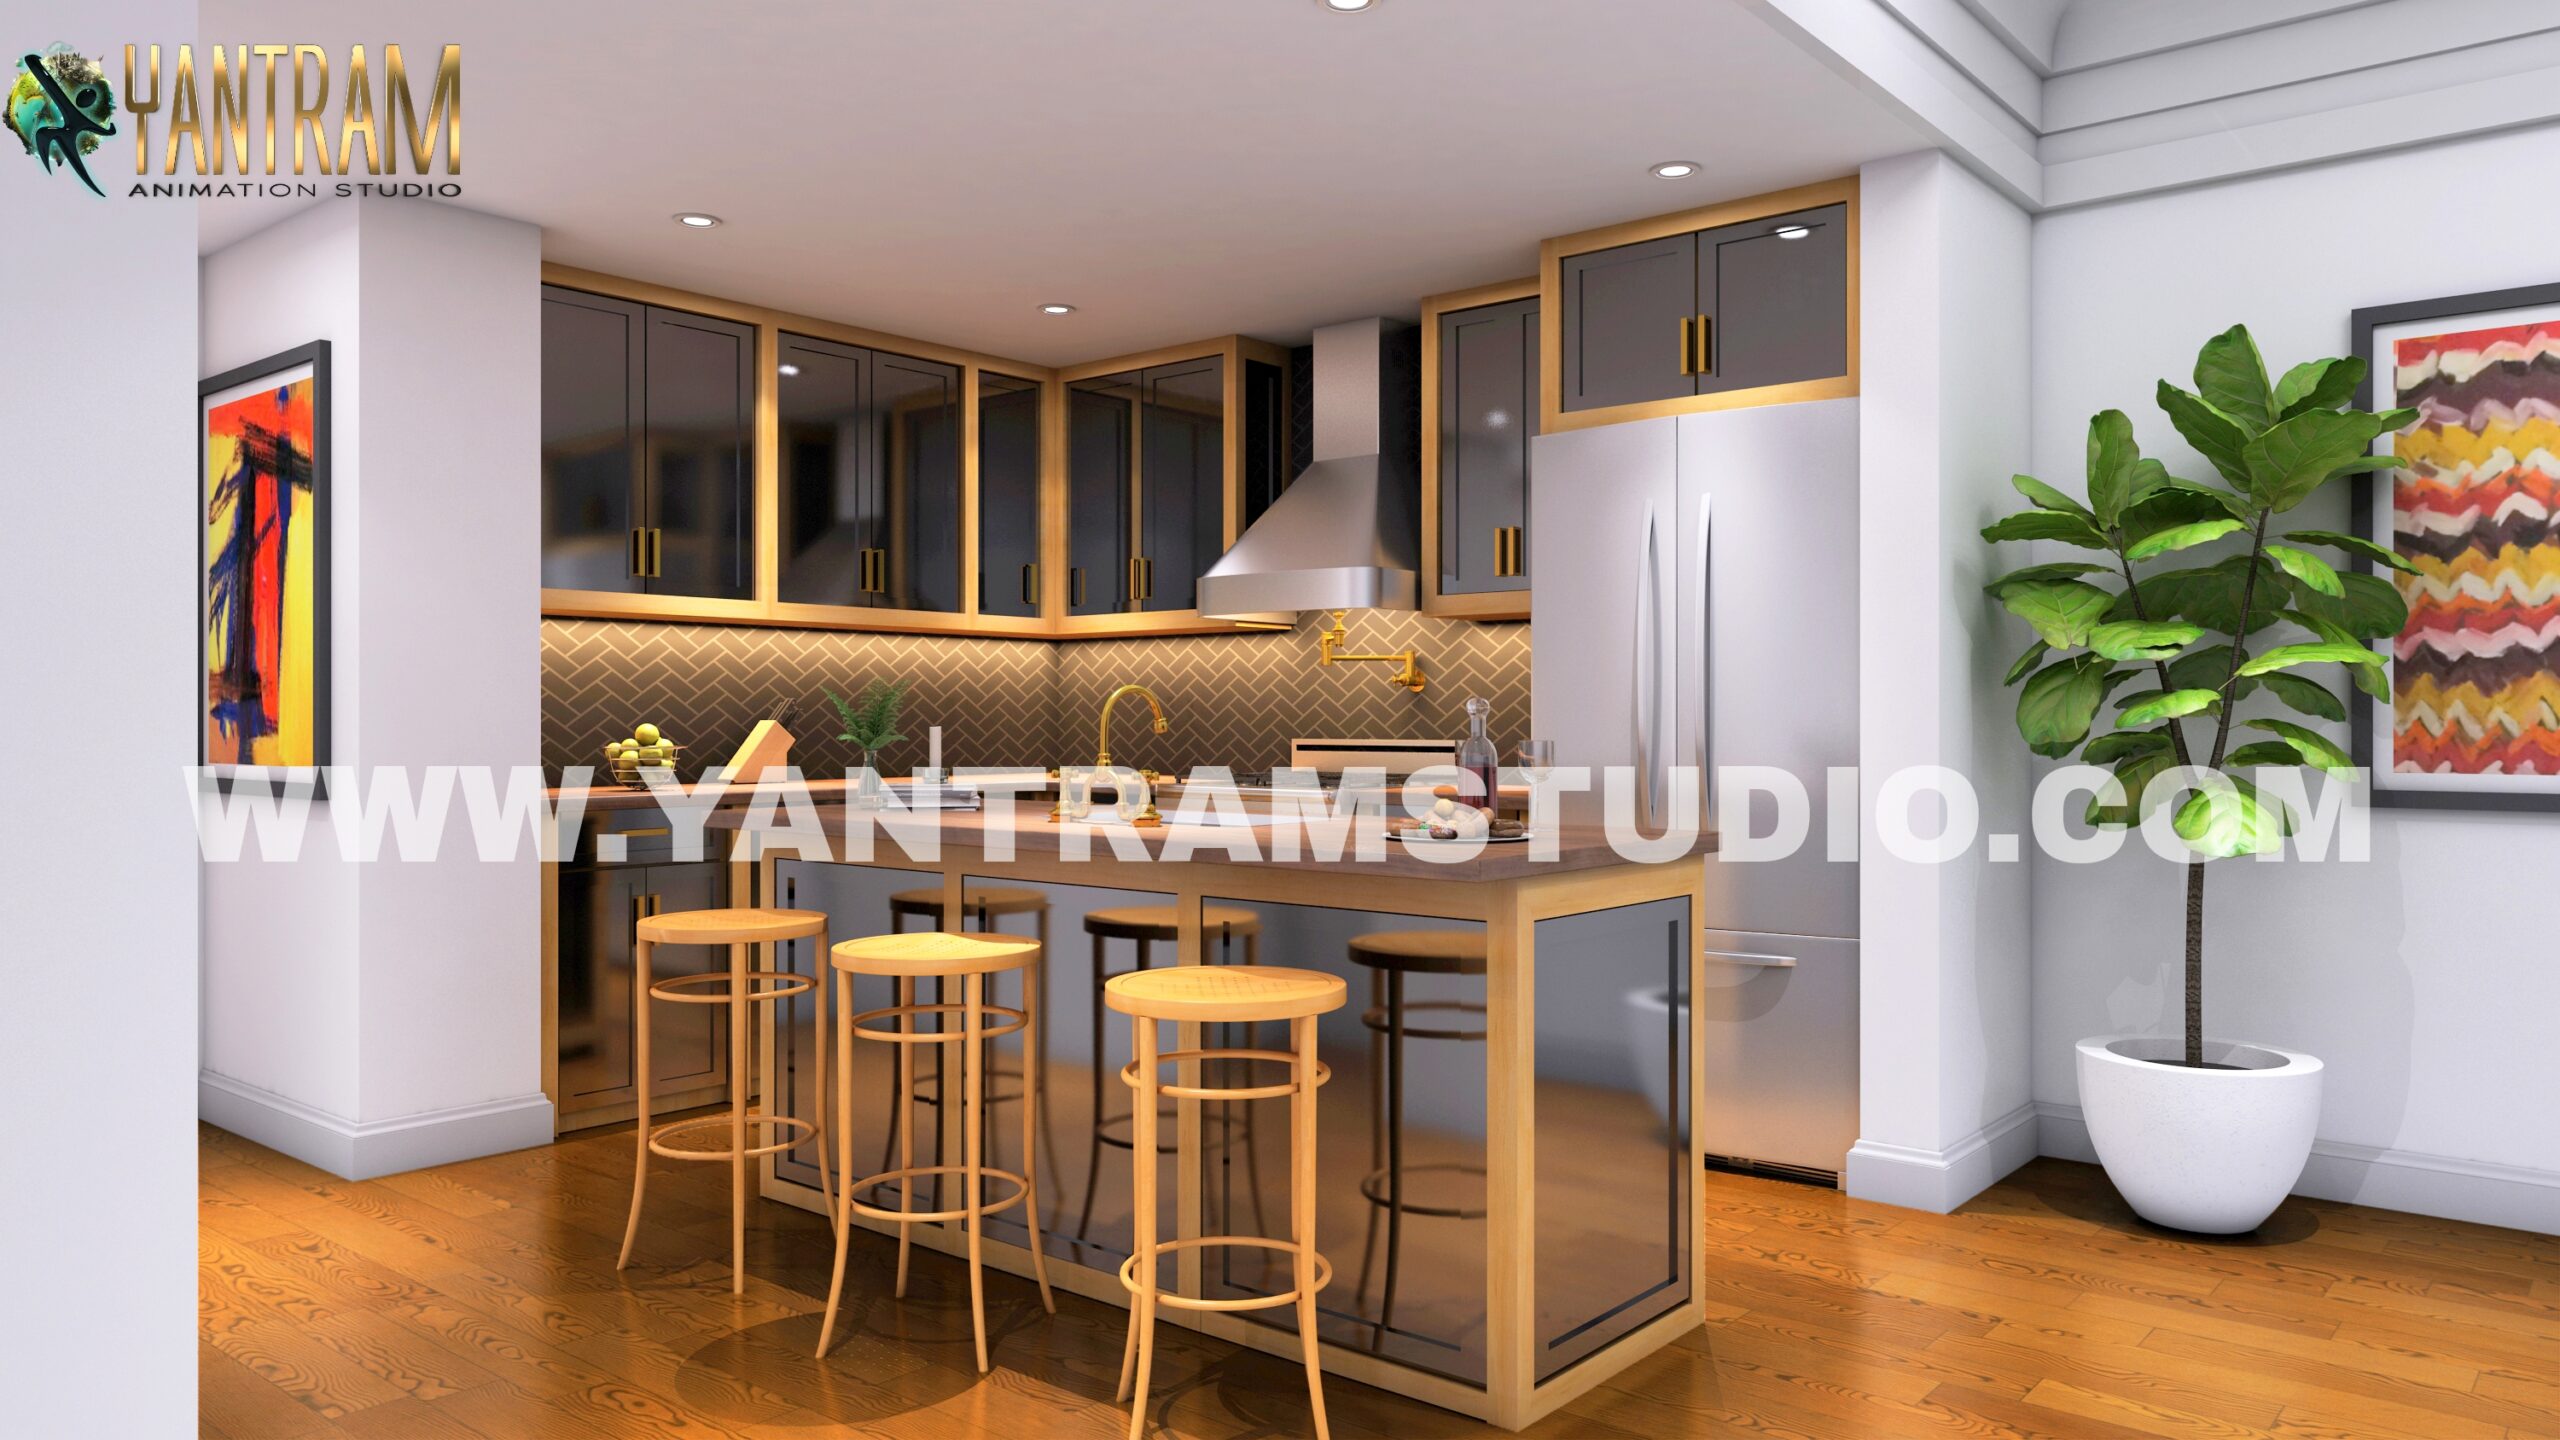 3d Interior Modeling of Creative Kitchen by Yantram residential interior design studio, Denton, Texas